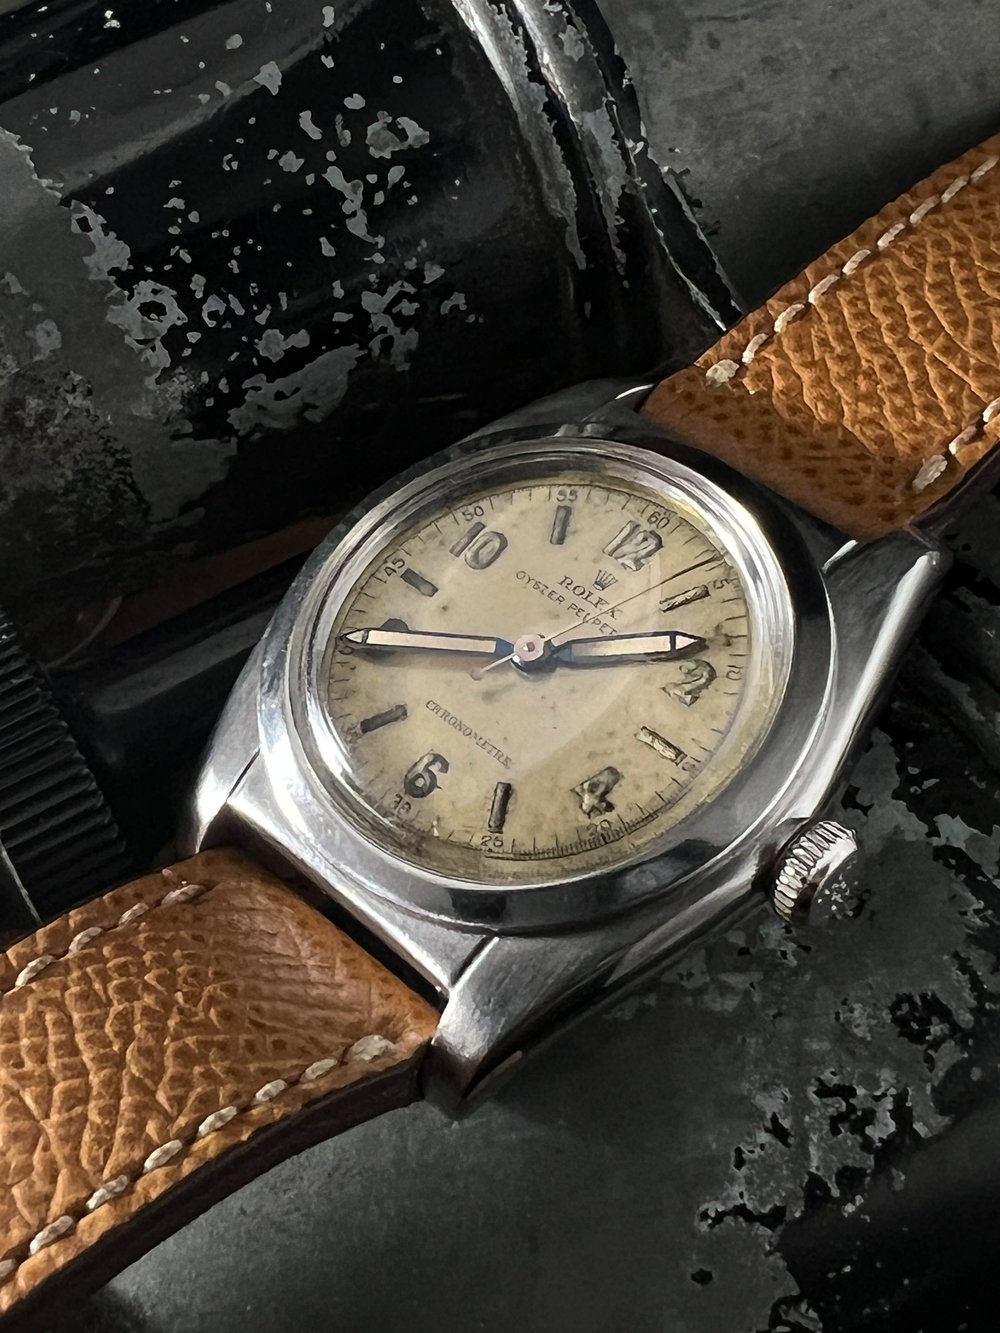 Rolex Watches — Cool Vintage Watches